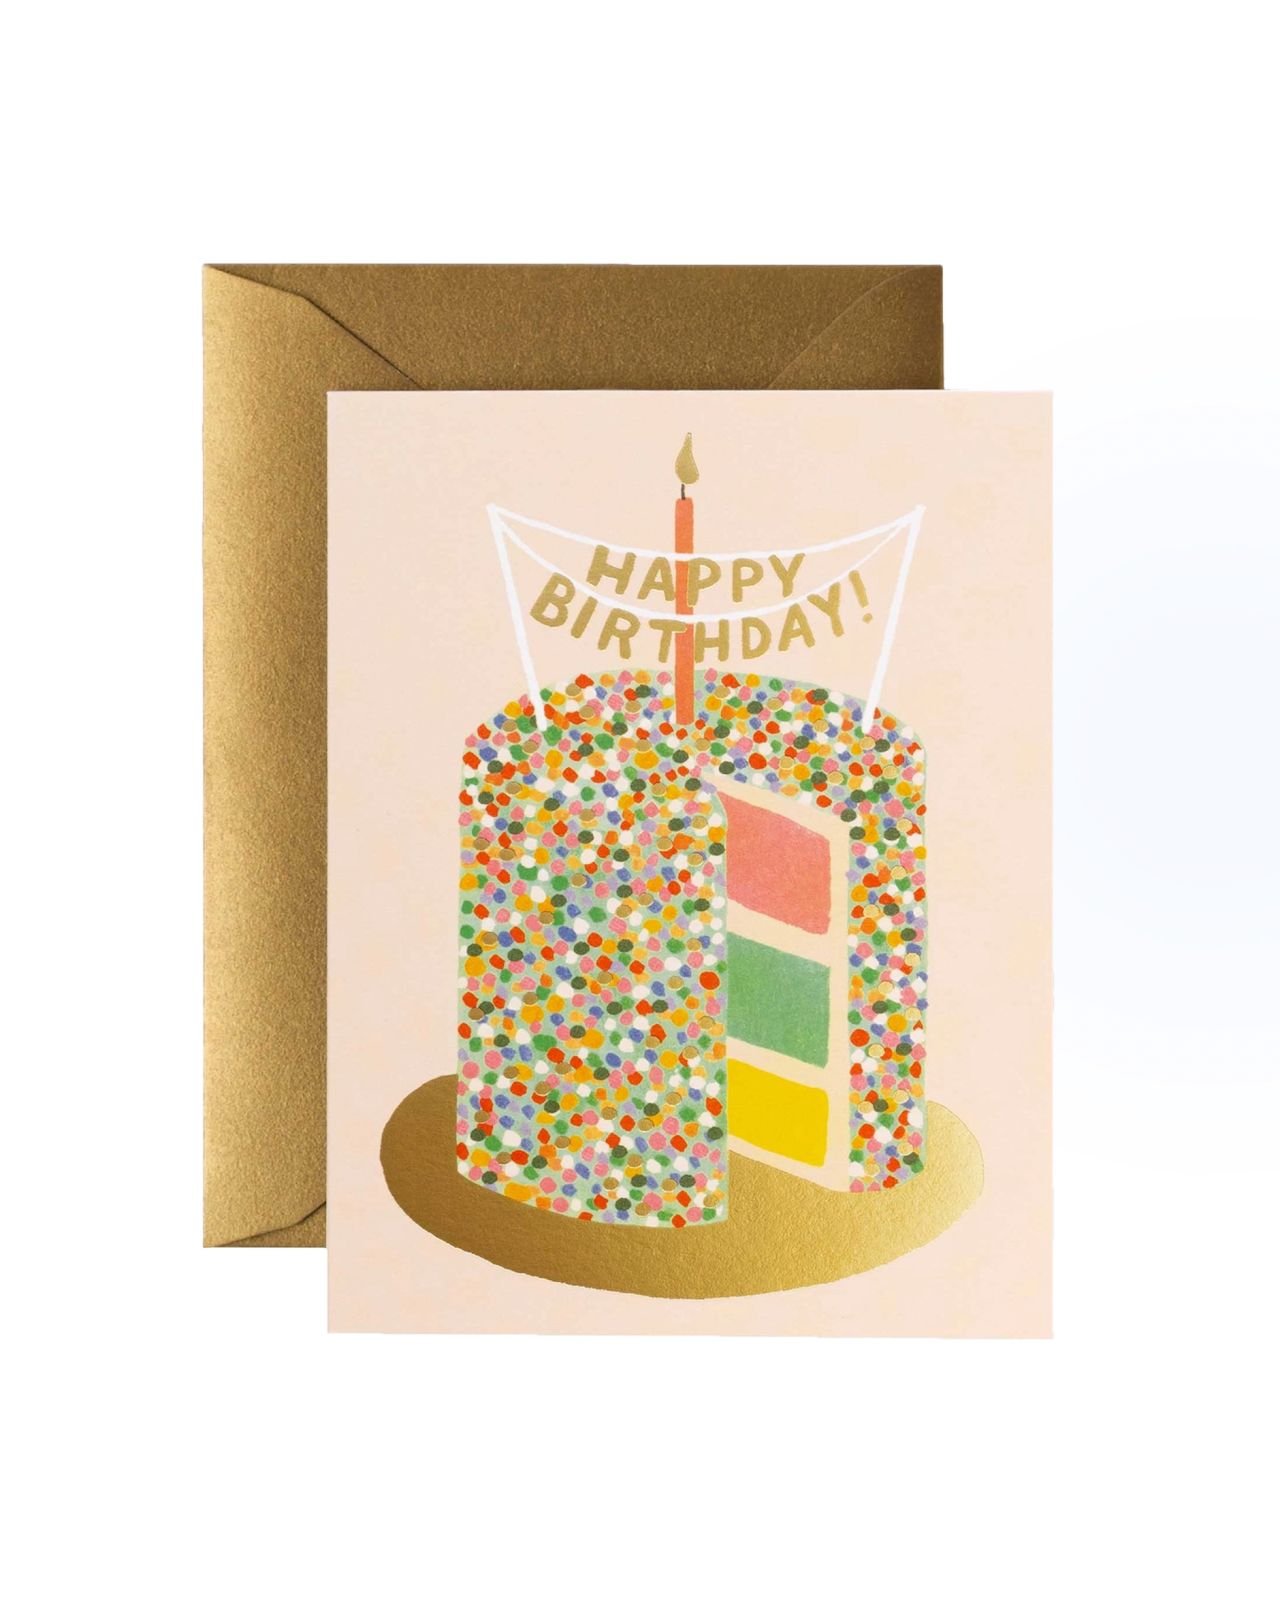 Layer Cake Birthday card